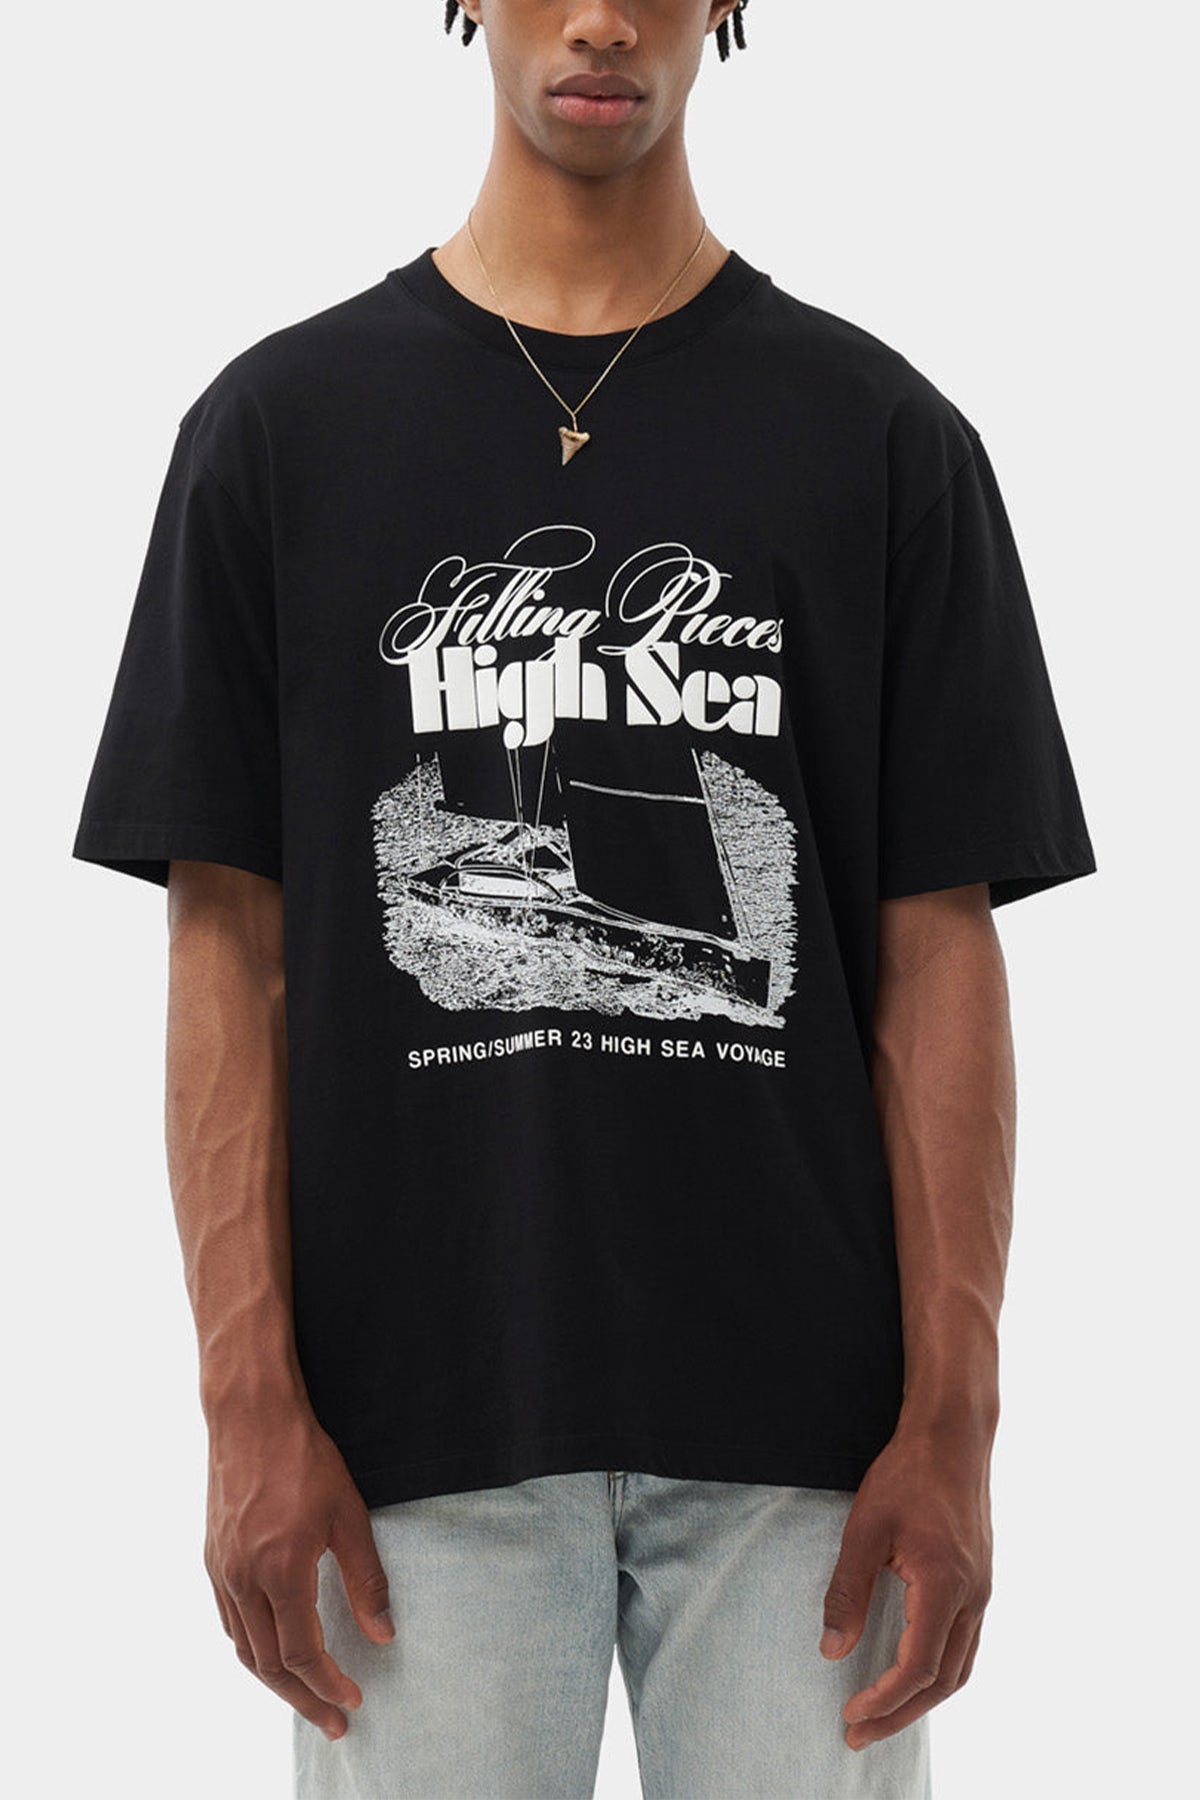 Tee High Sea in Black - shop-olivia.com